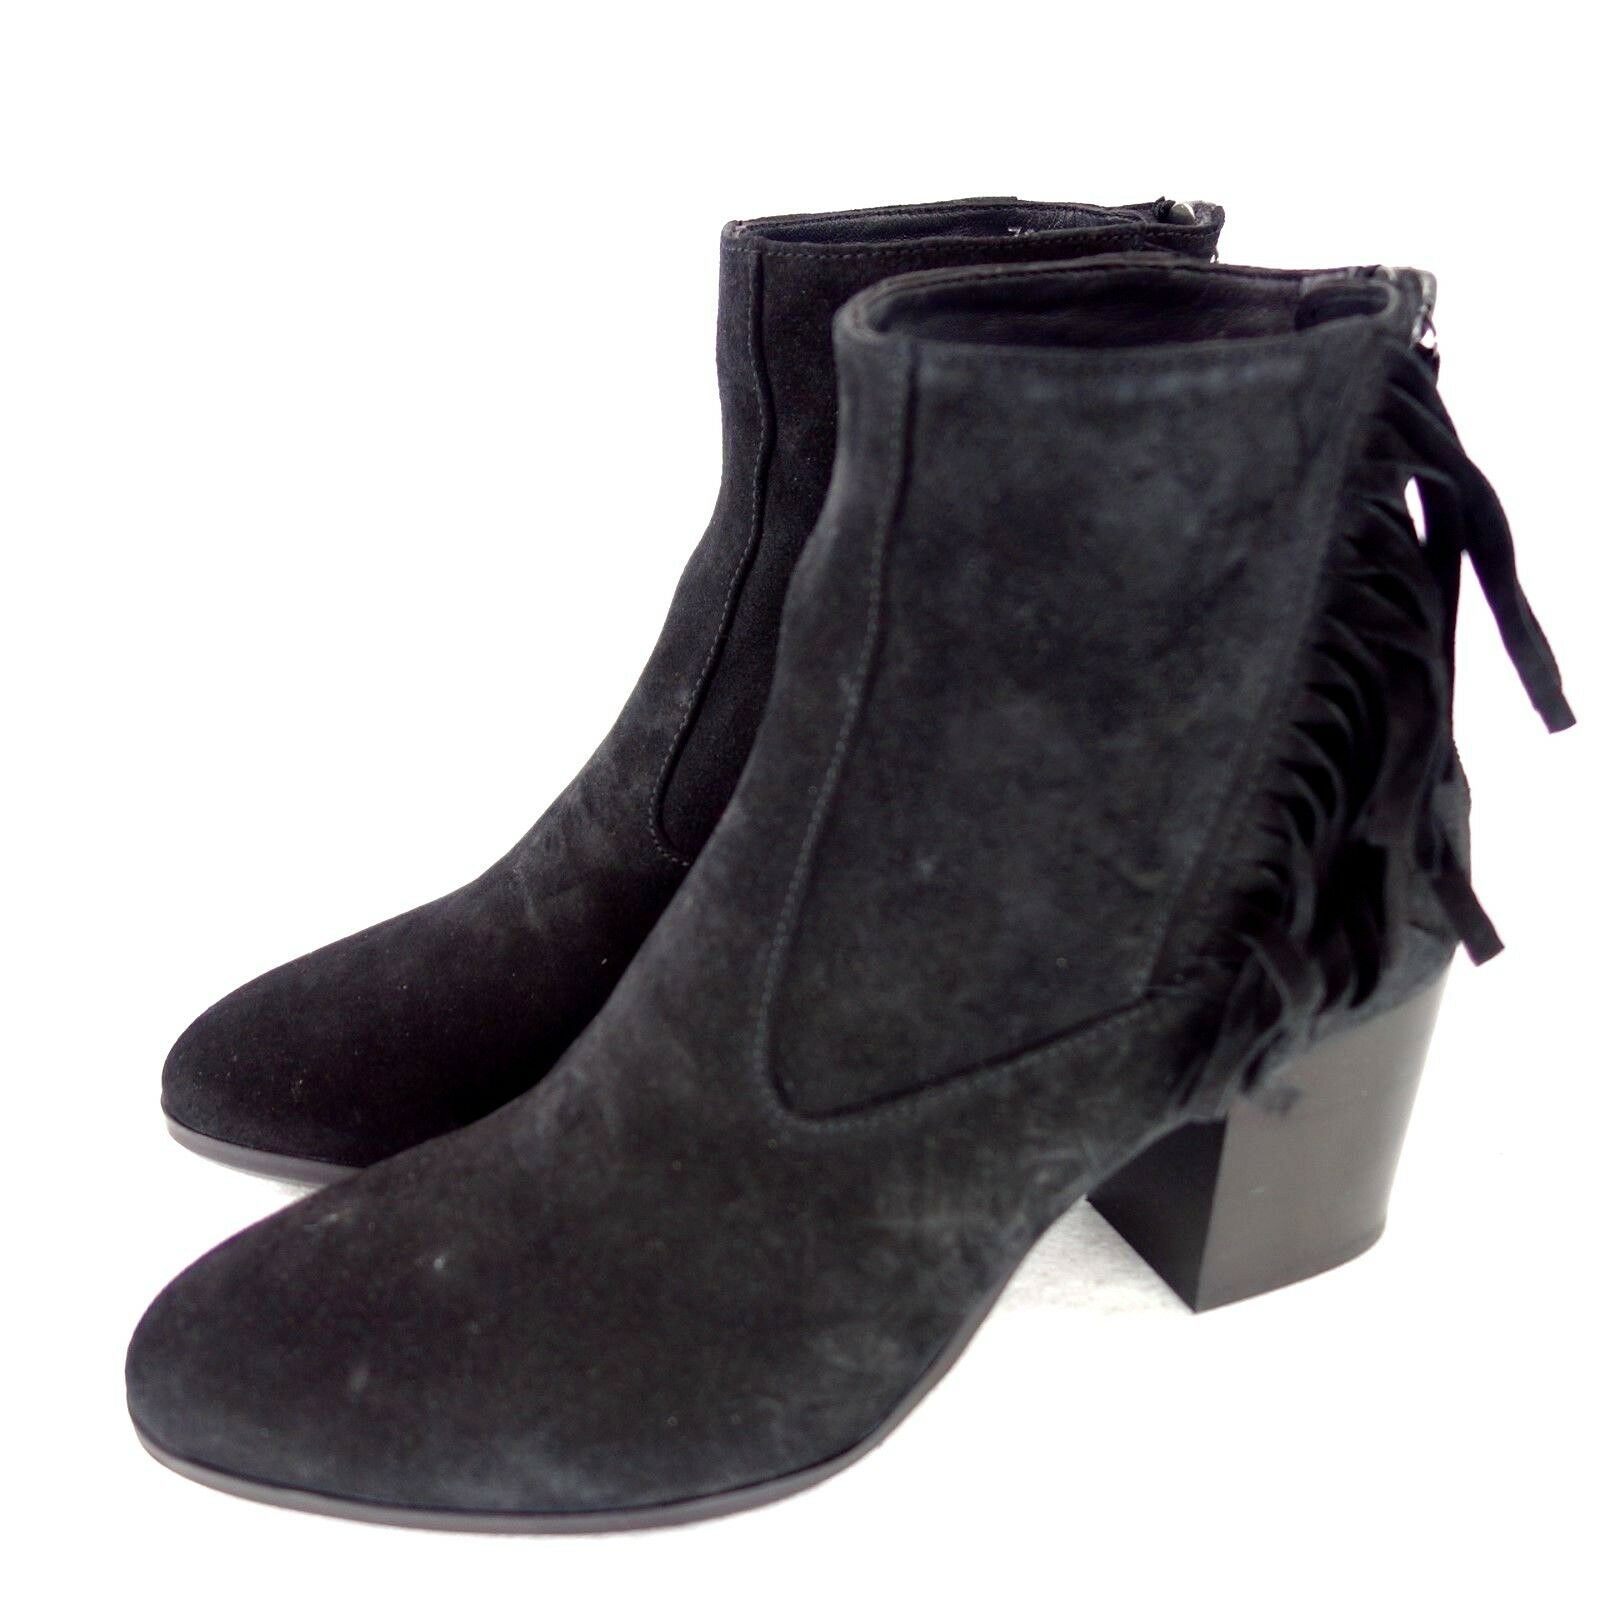 Homers Damen Schuhe Stiefel Stiefelette Boots Leder Schwarz 39,5 40,5 Np 285 Neu - EUR 40,5